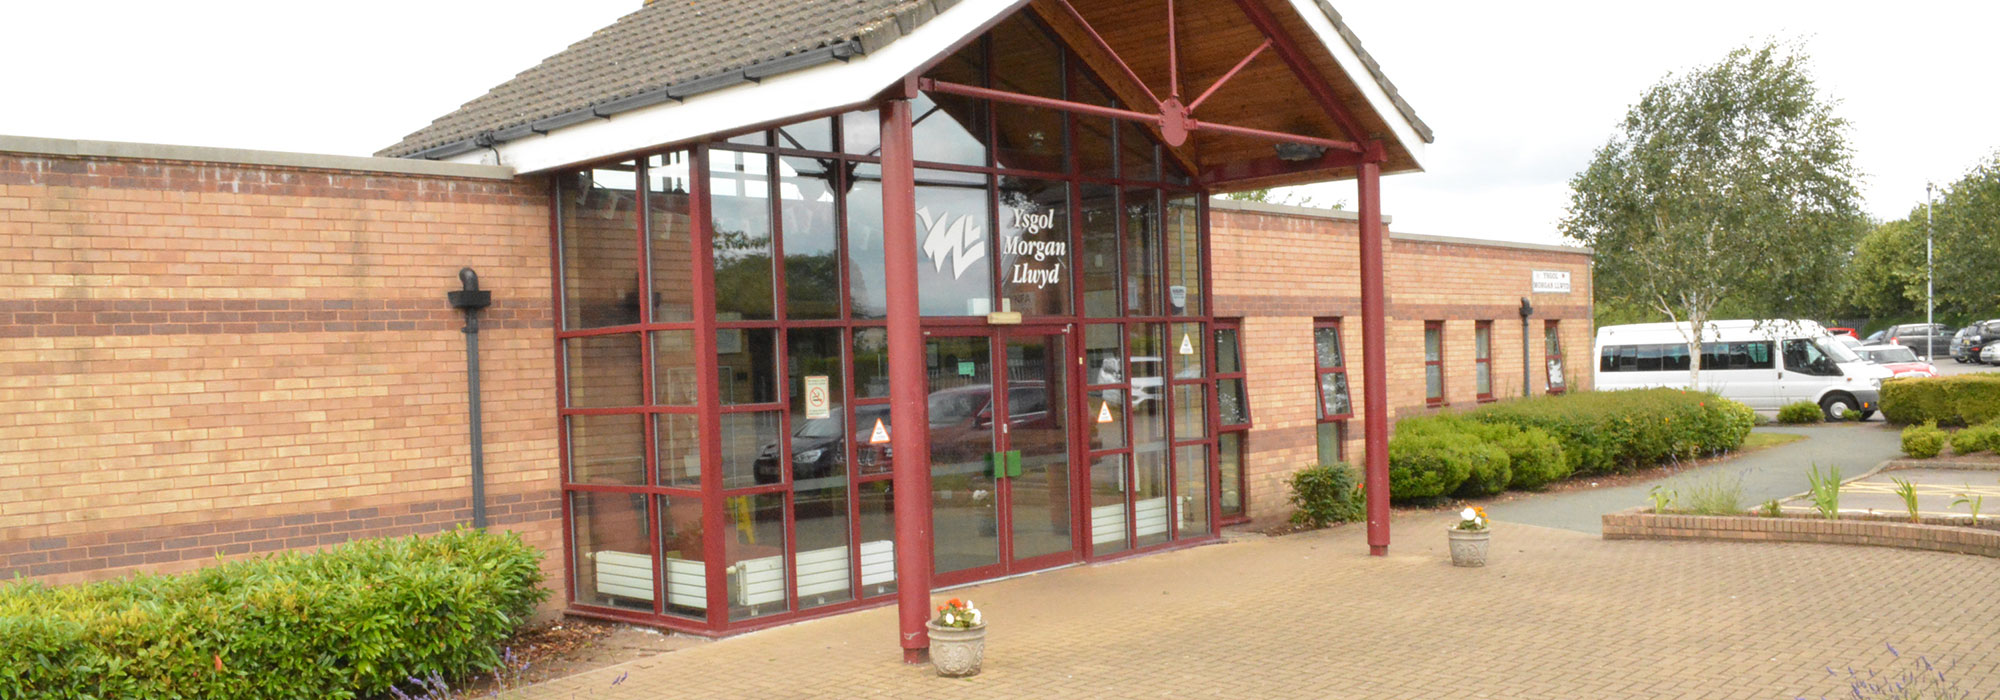 Pupils and facilities at Ysgol Morgan Llwyd in Wrexham